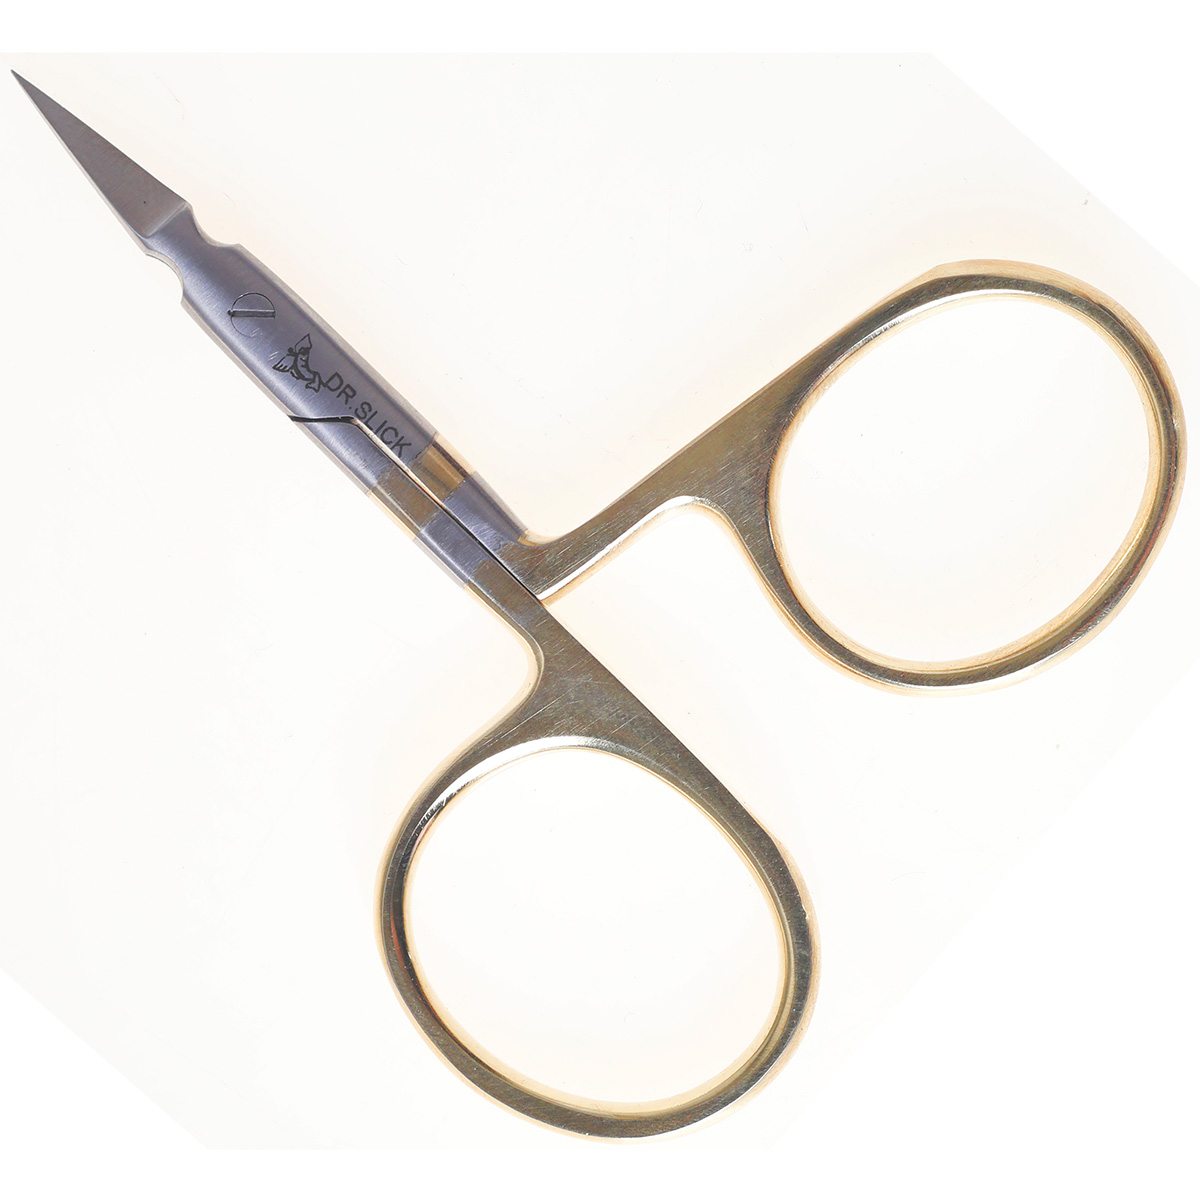 Dr Slick Twisted Loop 4 All Purpose Scissor